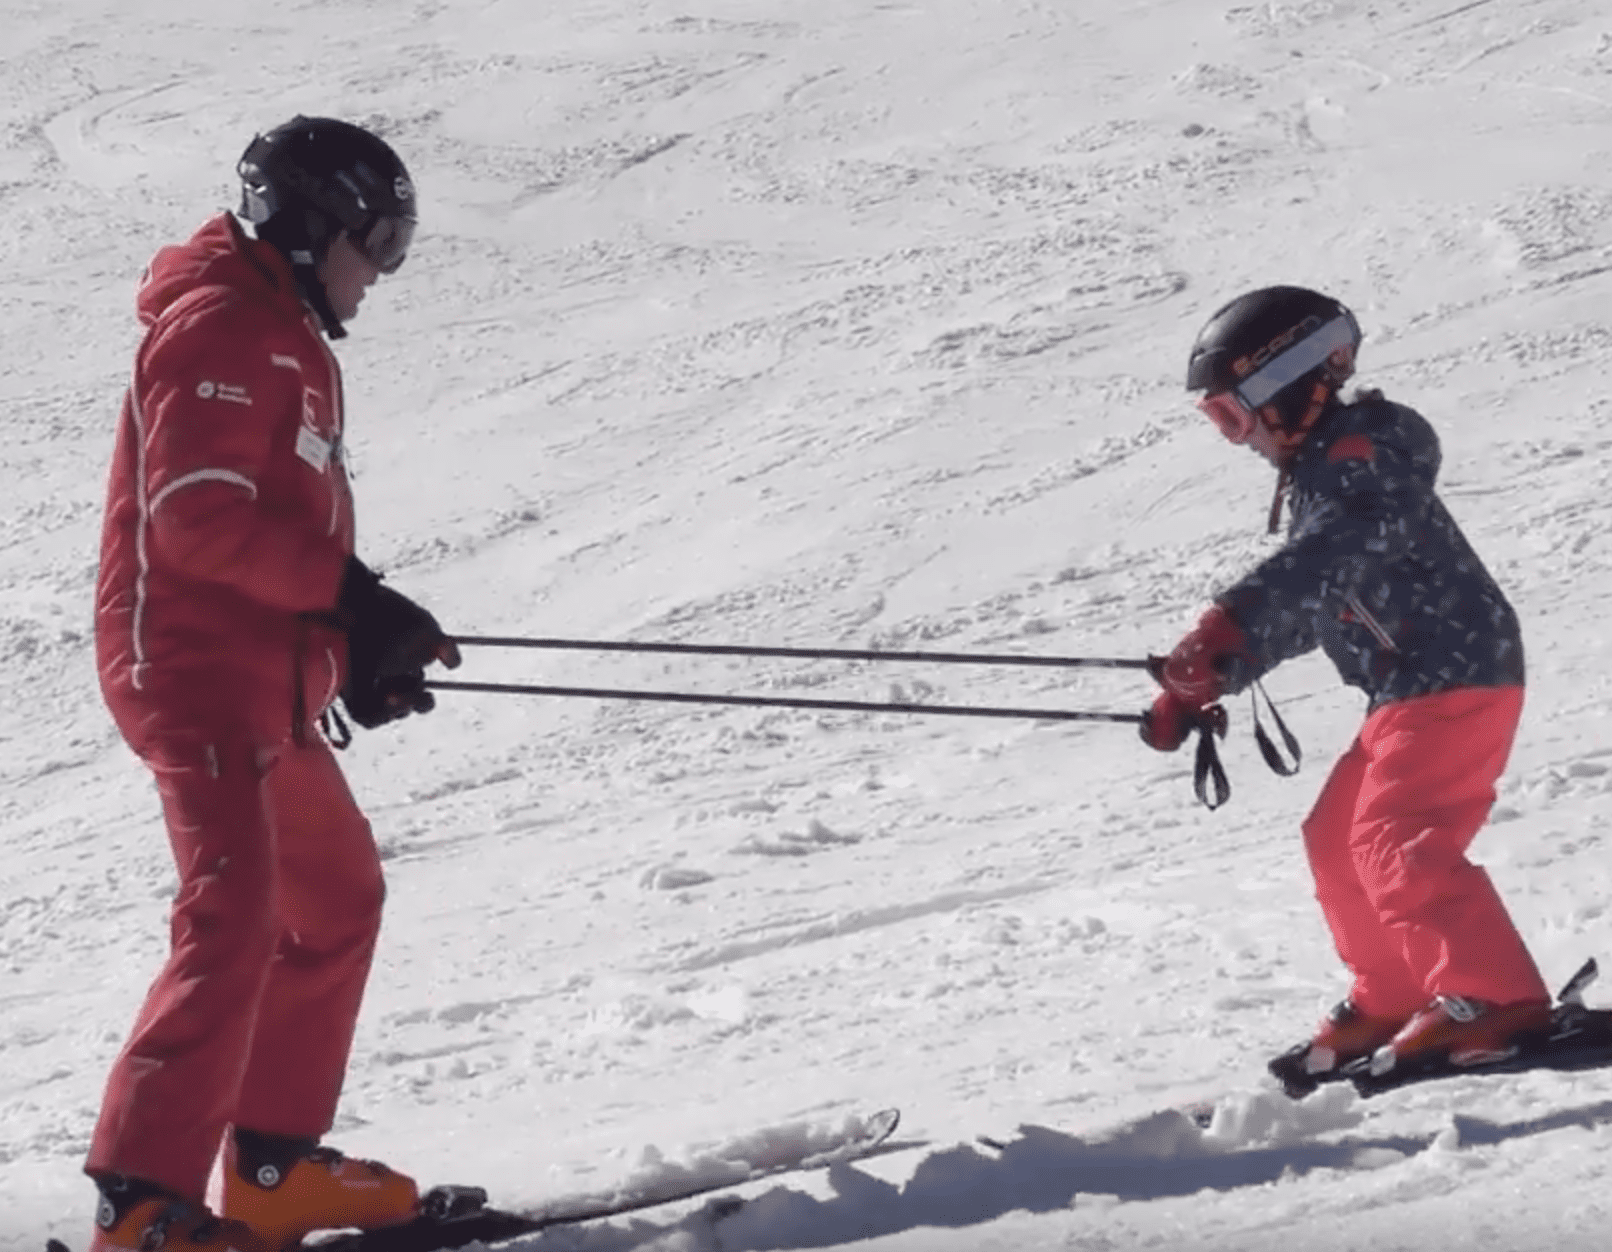 Ski School | Arinsal | Vallnord | Andorra